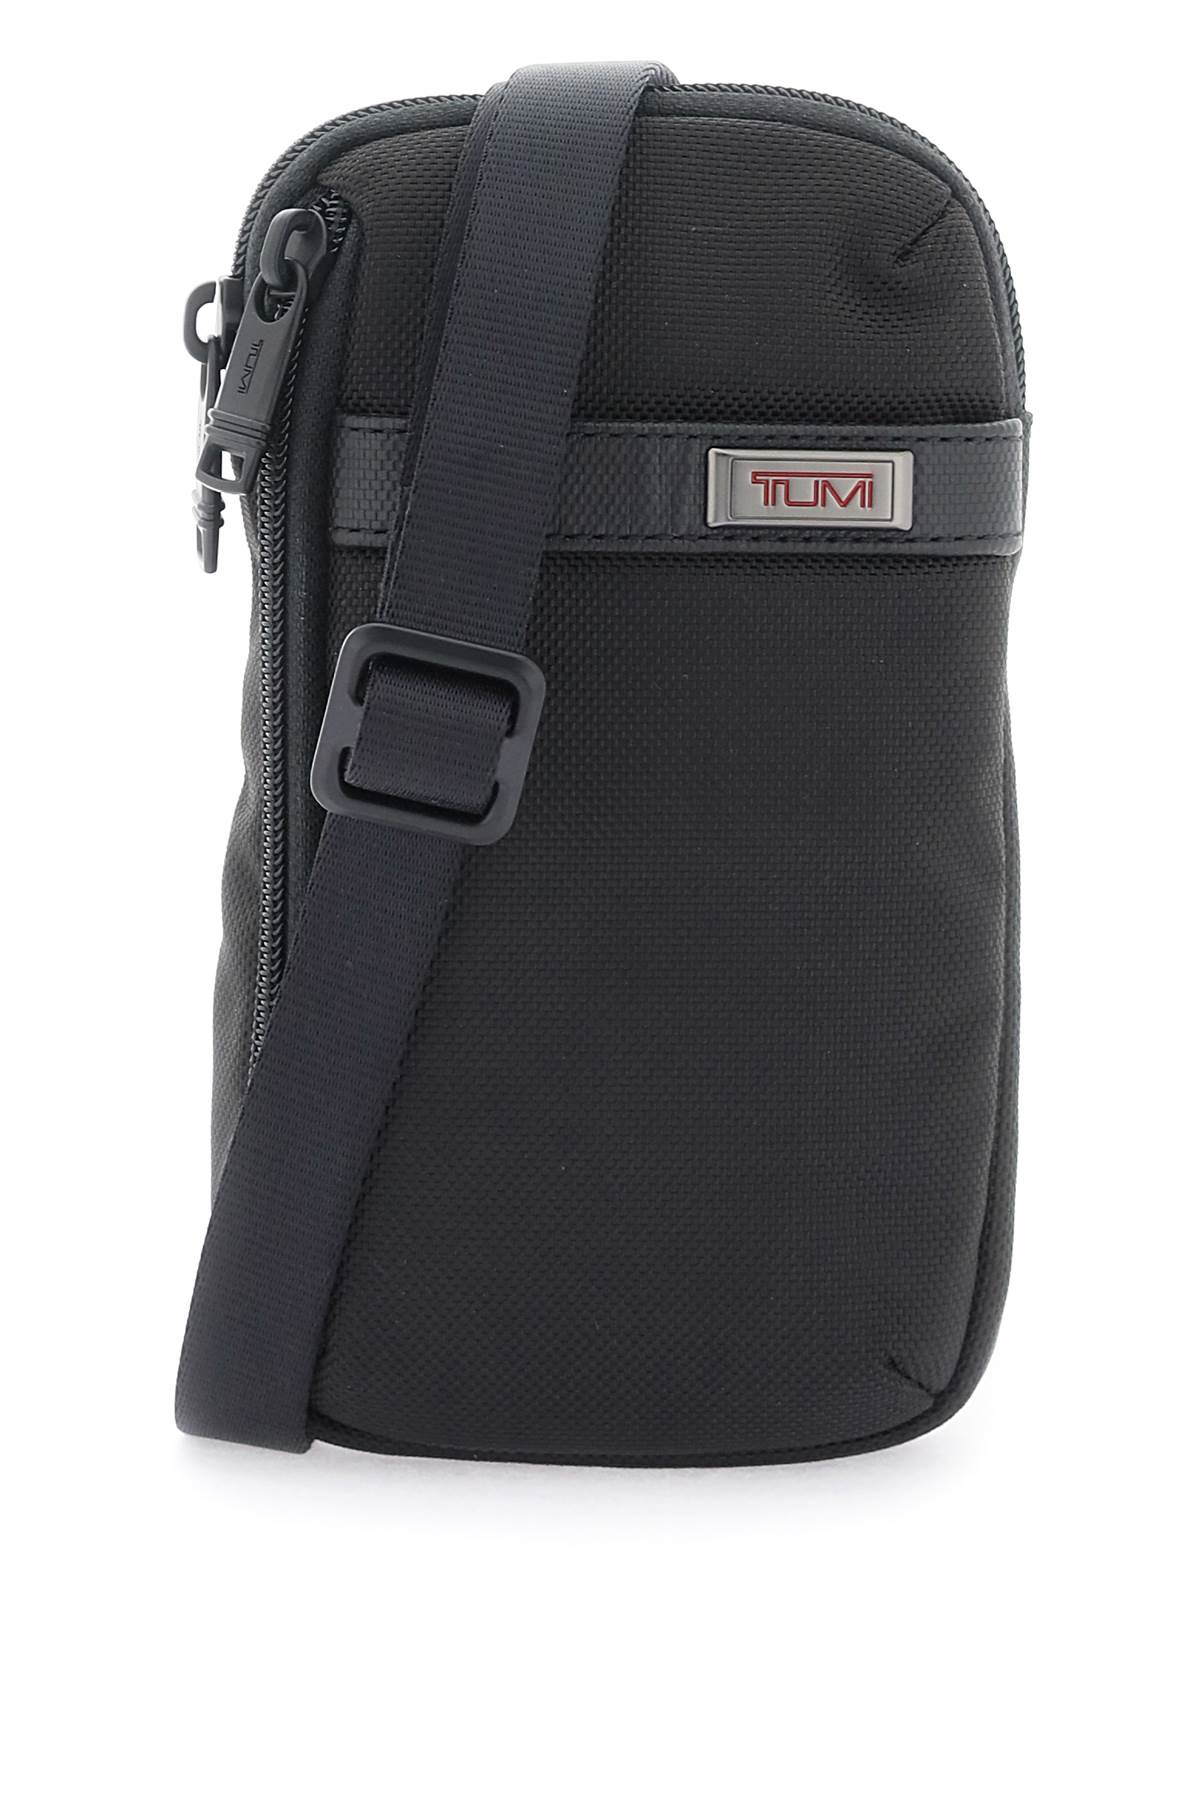 Tumi Alpha Smll Crossbody Bag In Black (black)